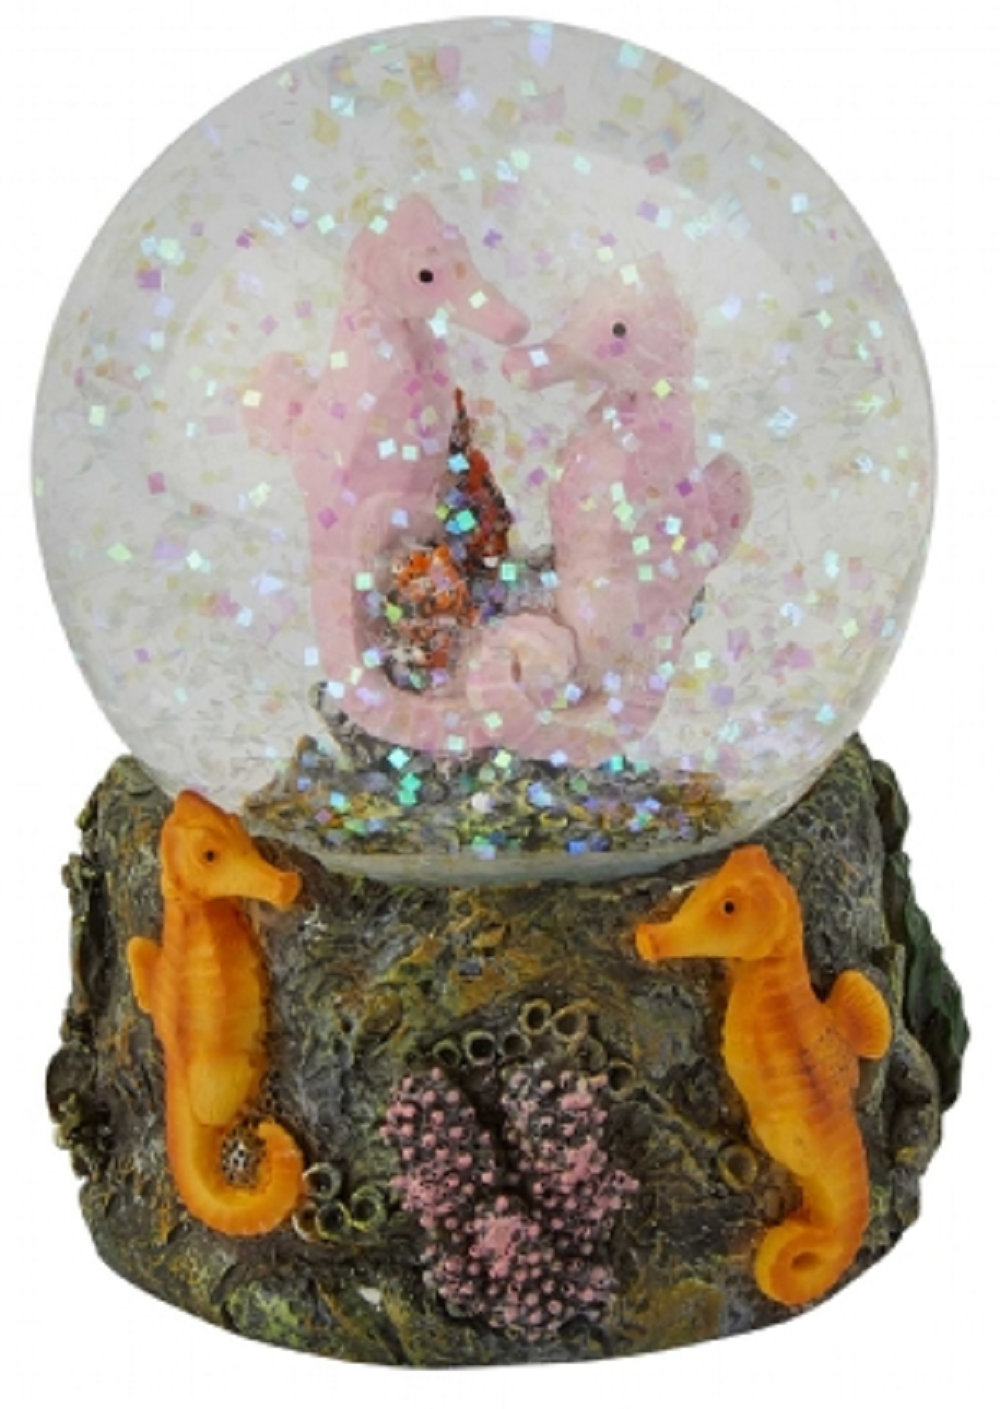 Ravensden Seahorse Glitter Globe